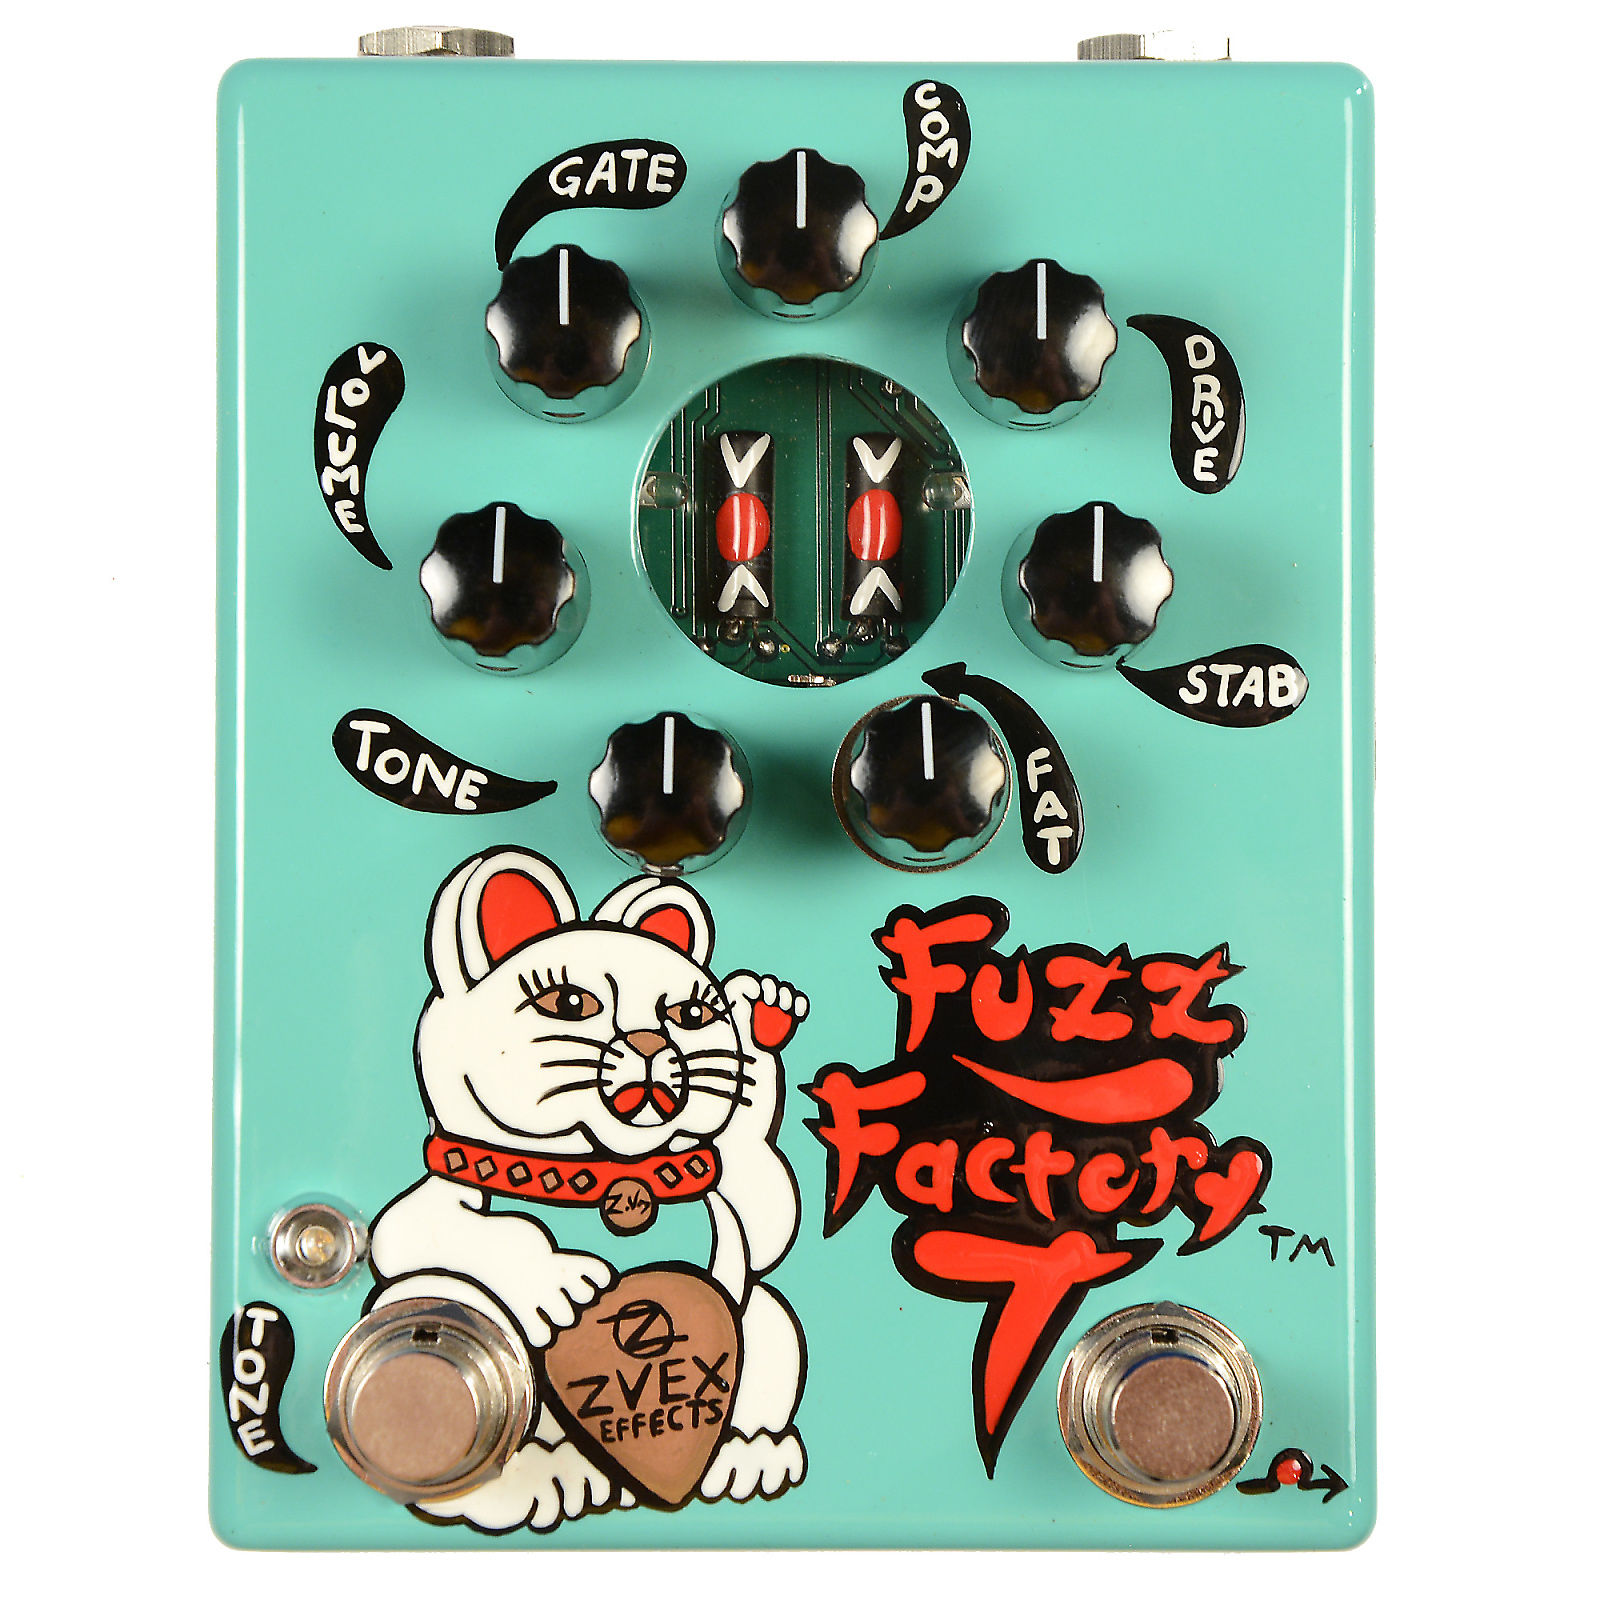 Fuzz Factory 7 - Zvex Fuzz Factory 7 - Audiofanzine